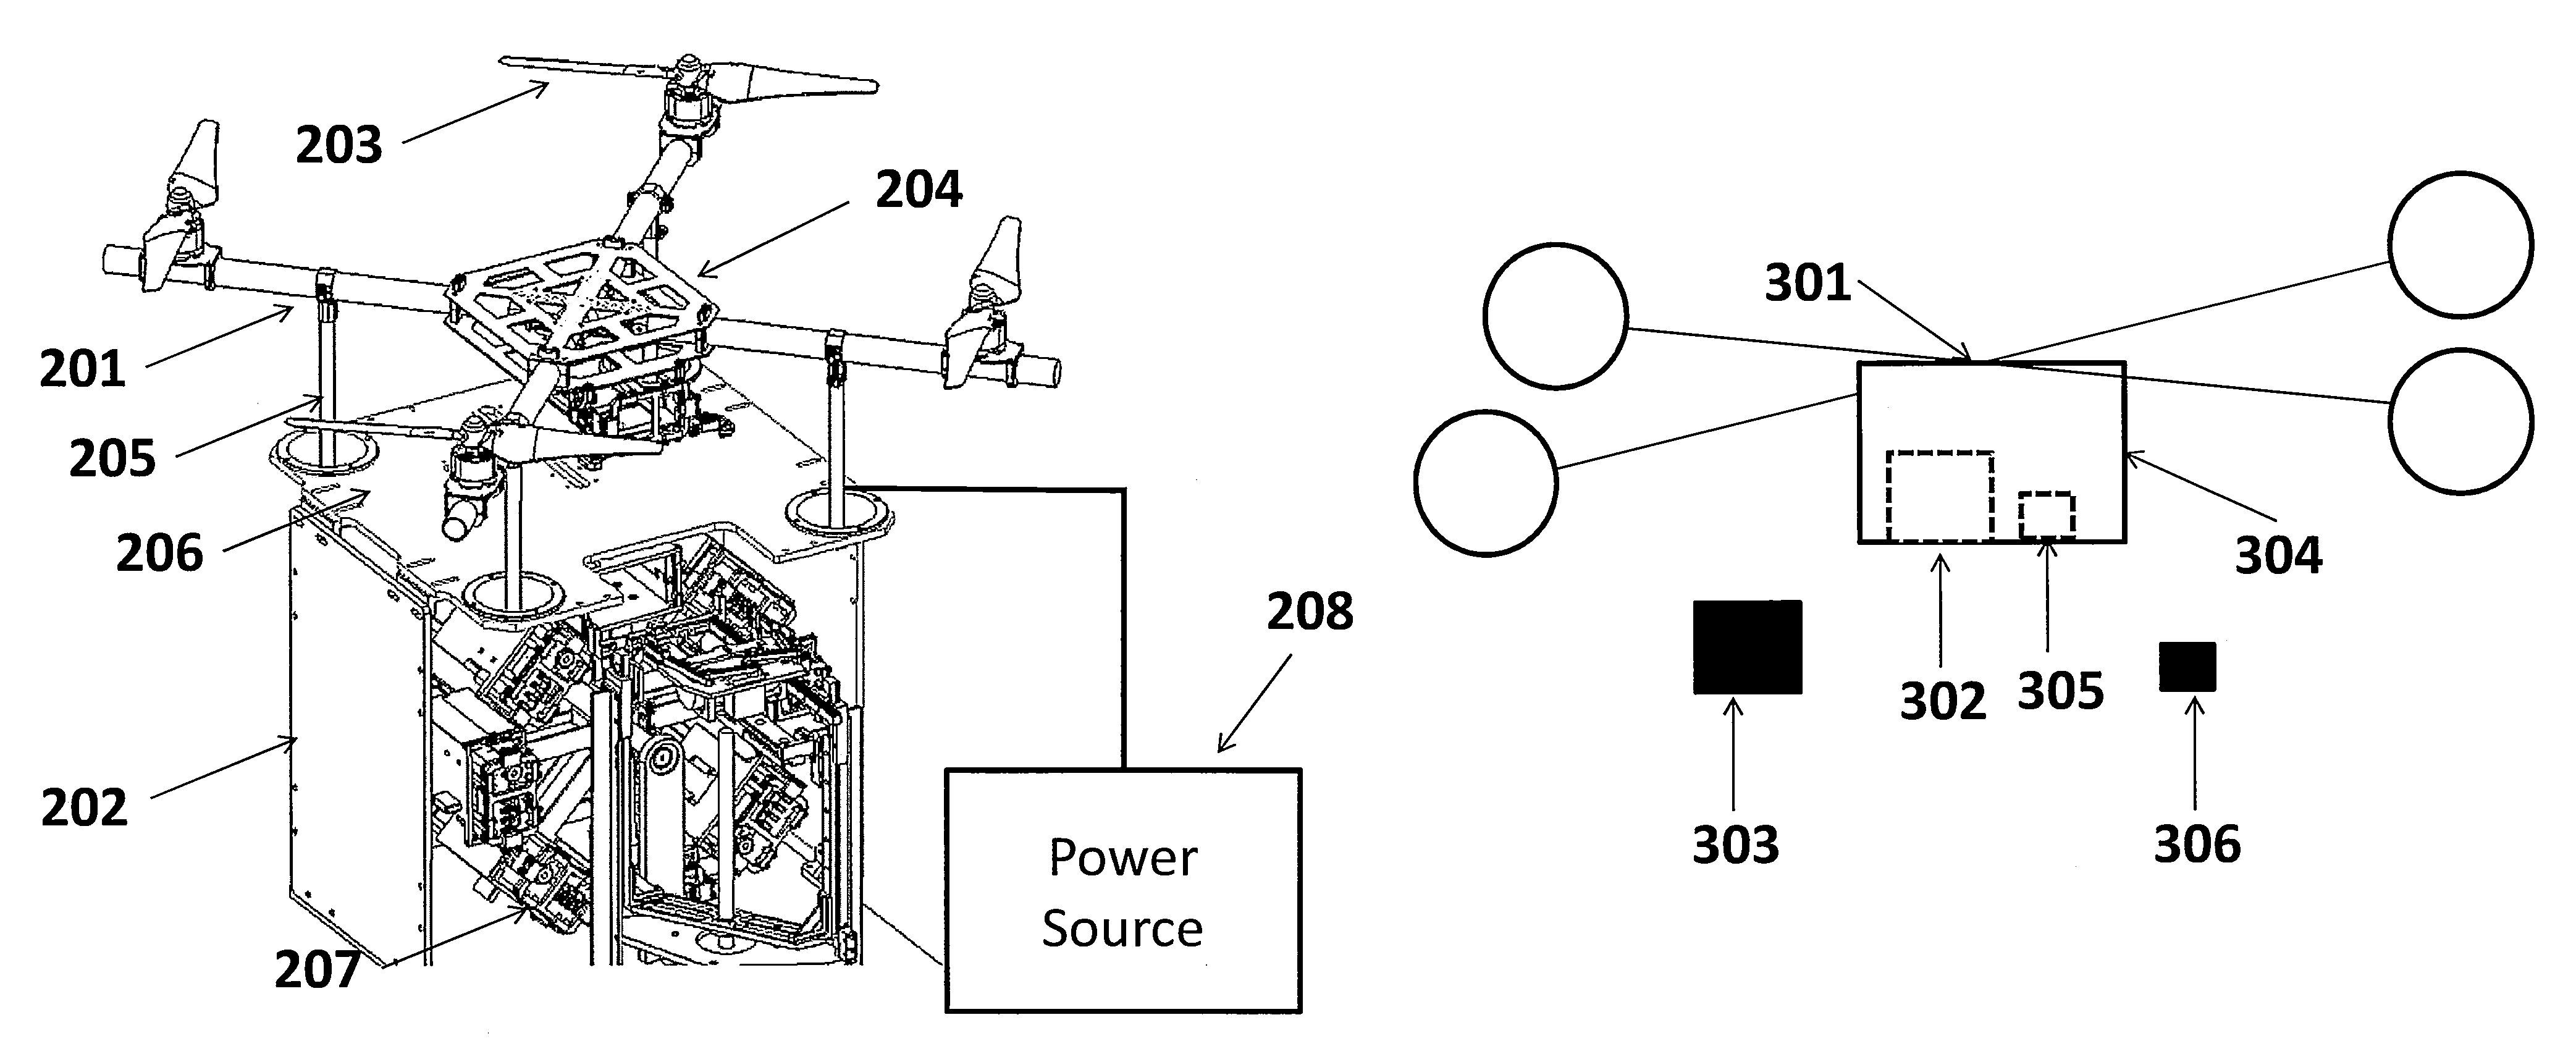 Systems and methods for UAV battery power backup